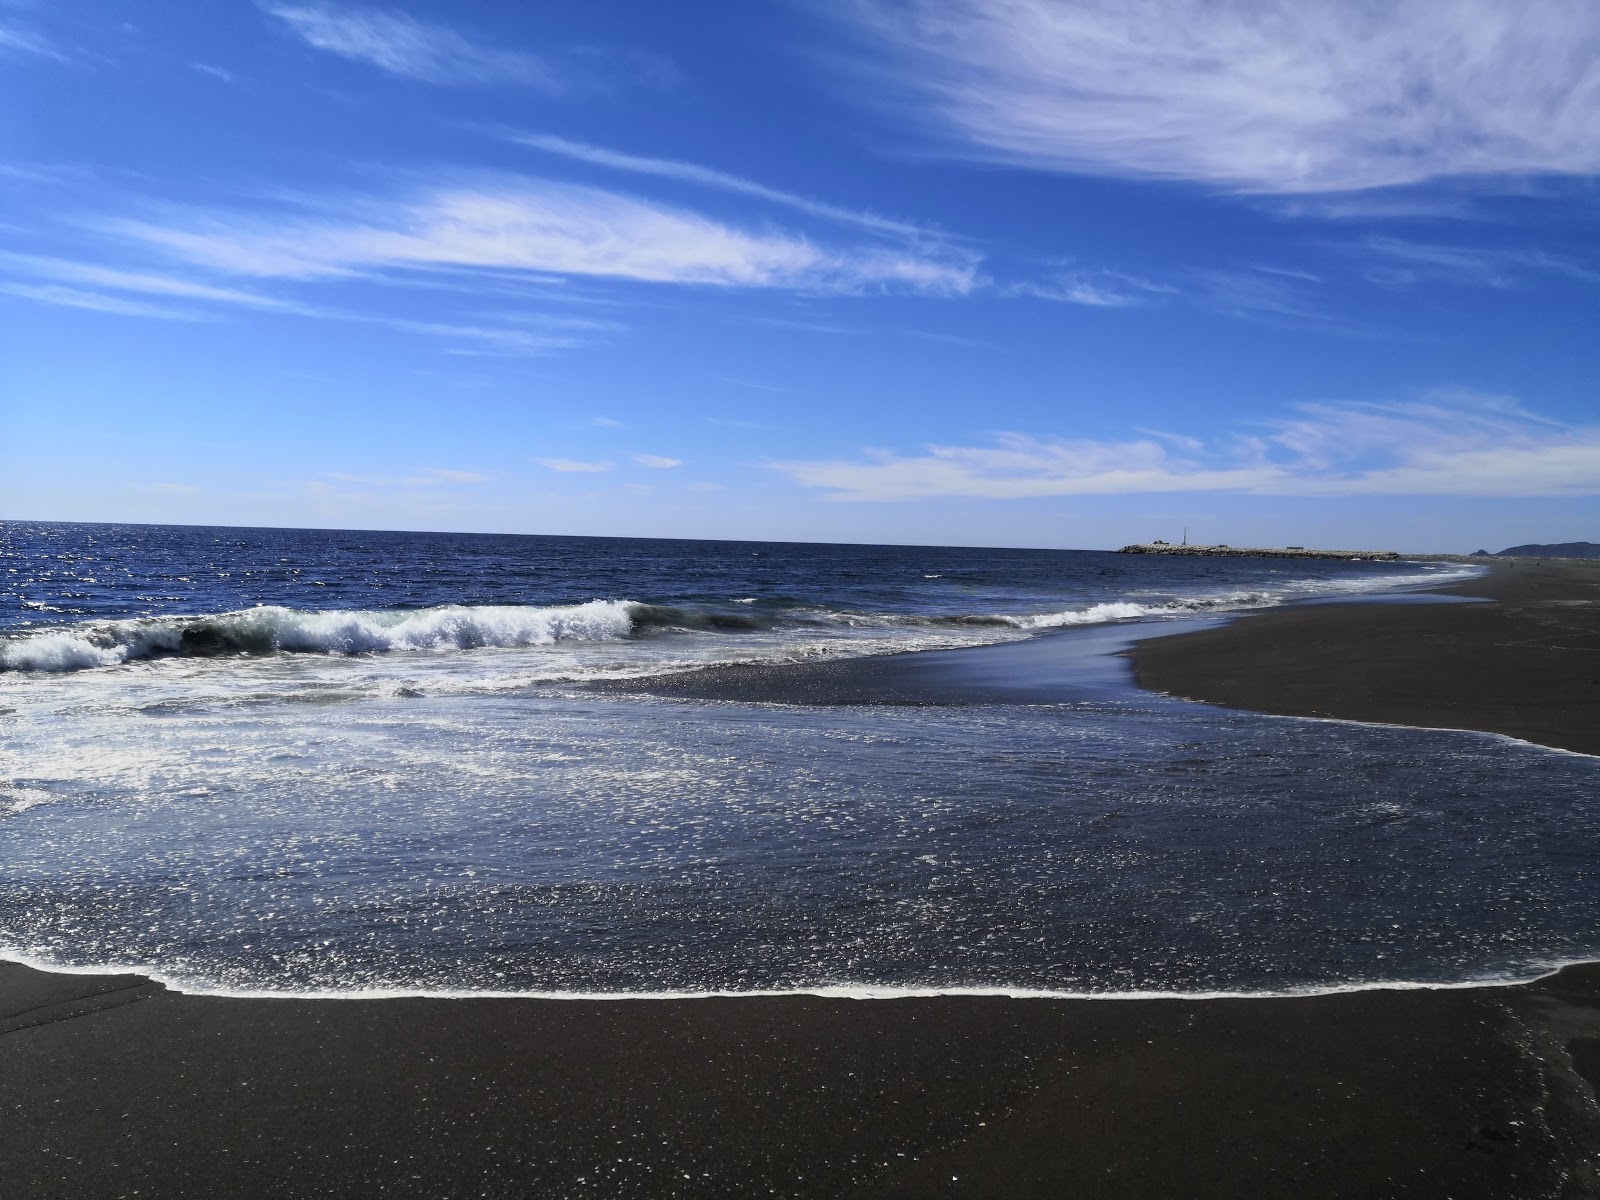 Foto de Playa "El Eden" com água cristalina superfície